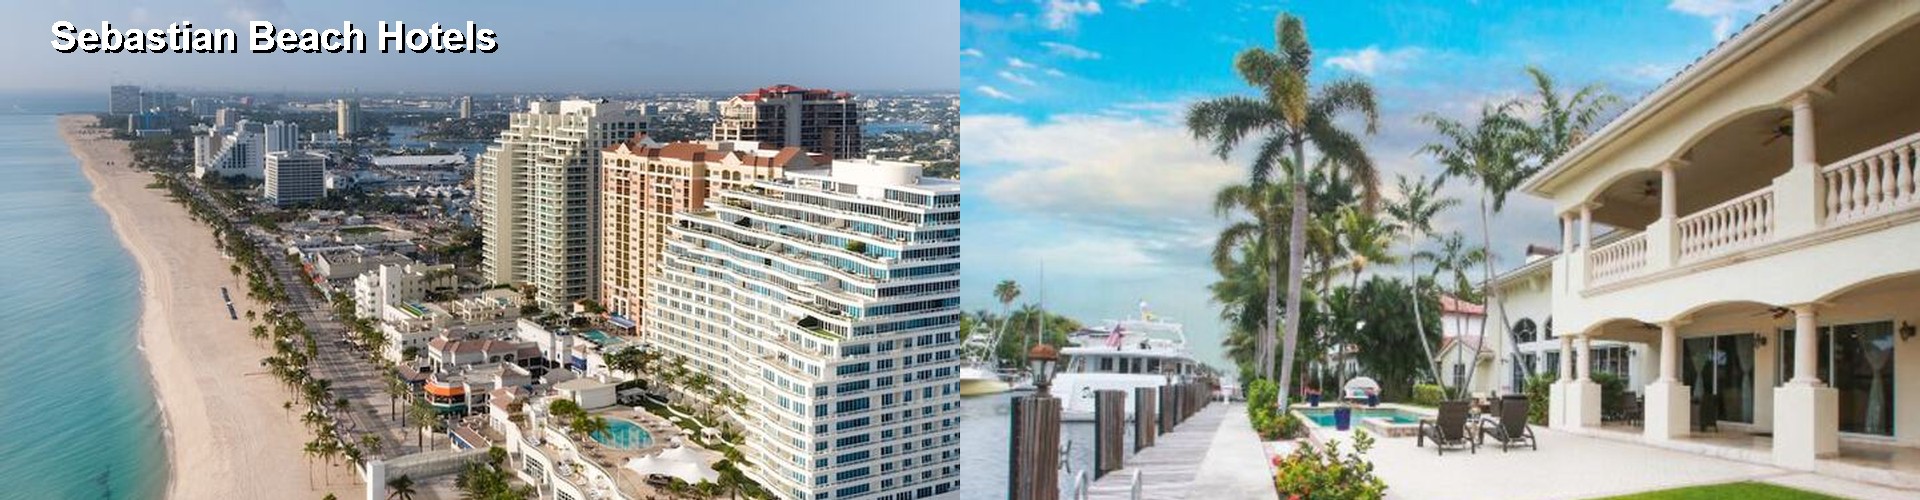 5 Best Hotels near Sebastian Beach